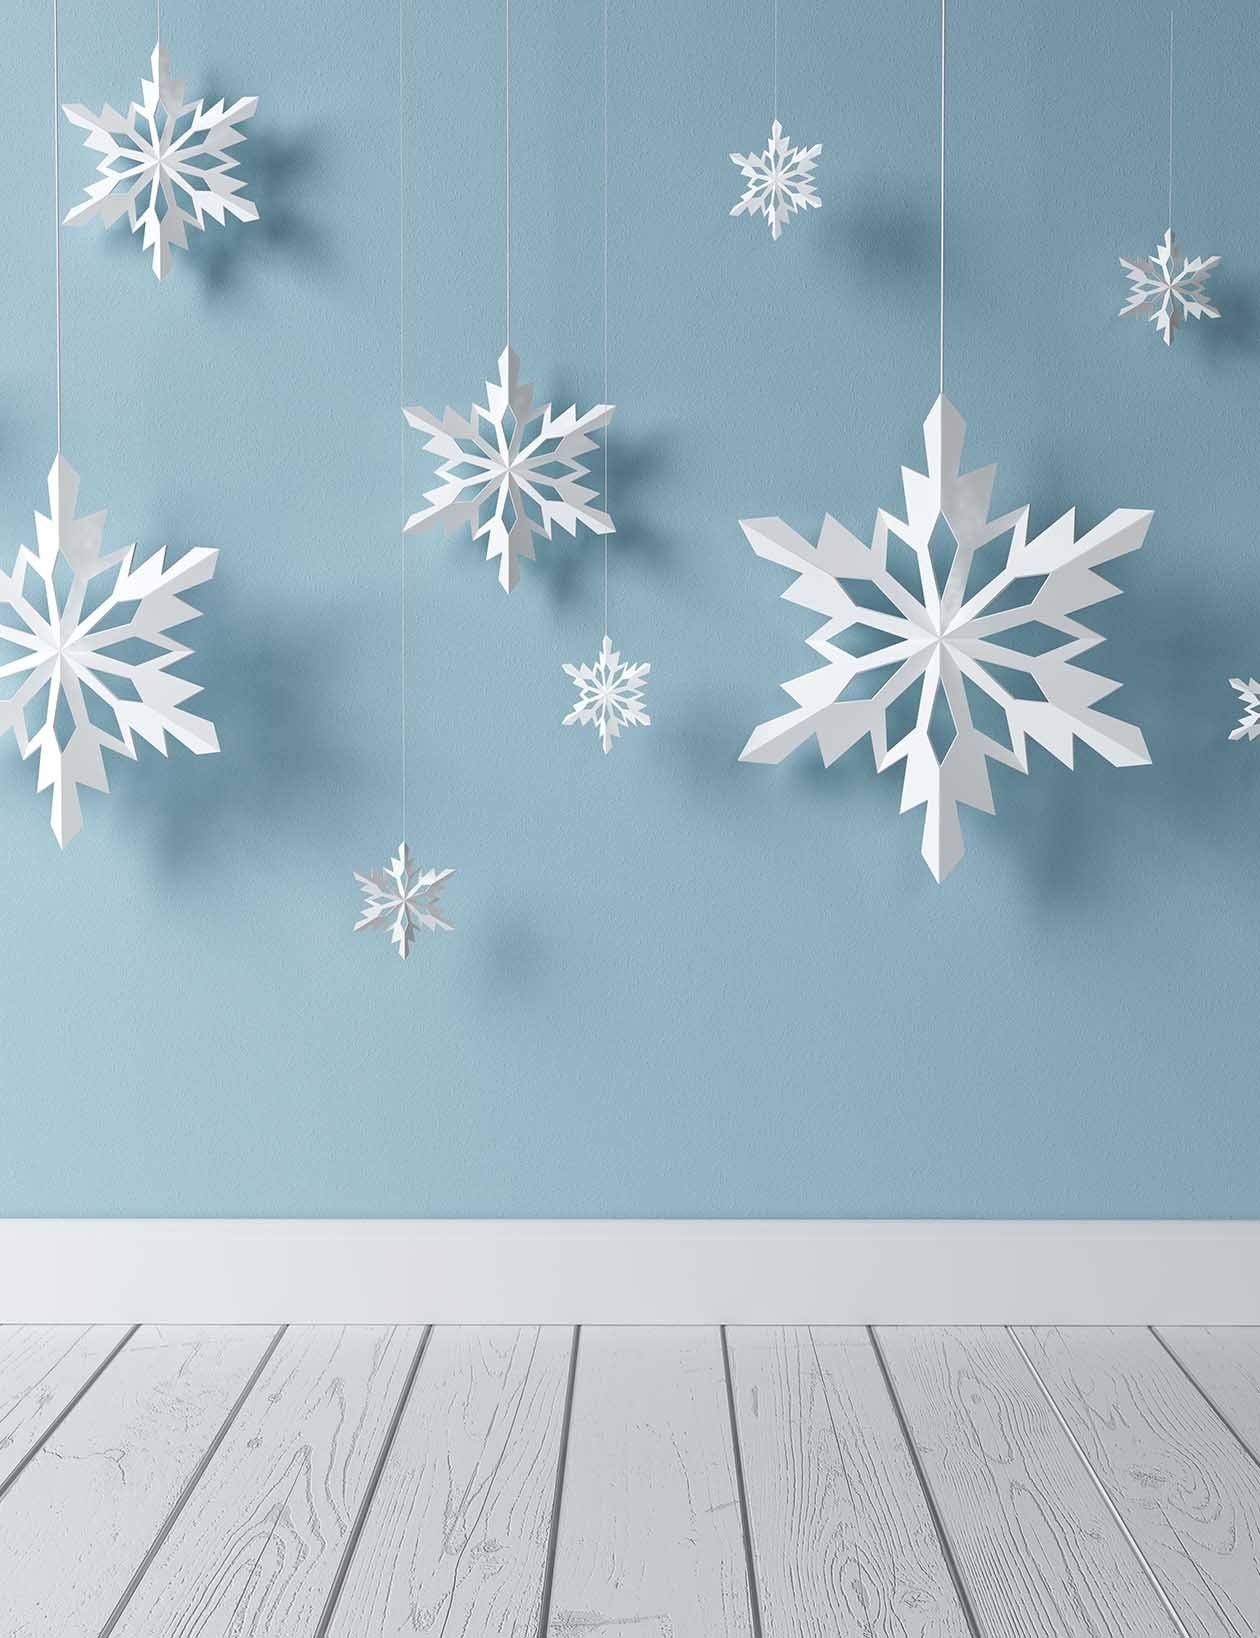 Snowflake Paper Cutting Hanging Before Blue Wall Backdrop Shopbackdrop